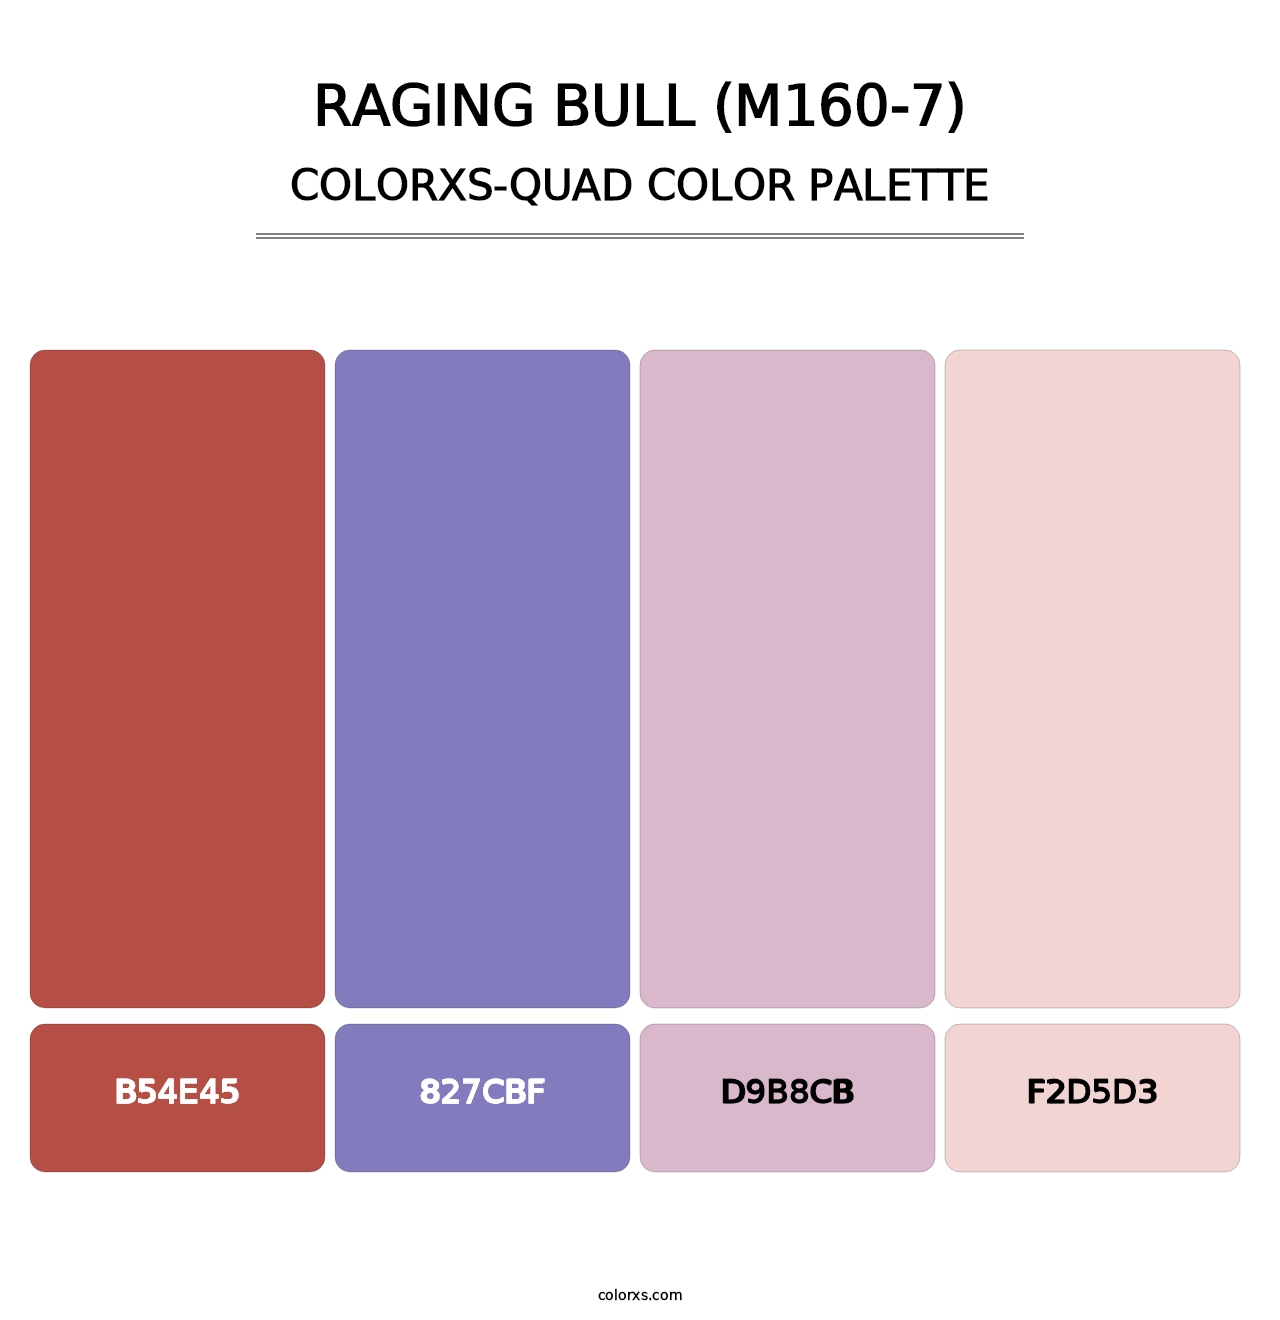 Raging Bull (M160-7) - Colorxs Quad Palette